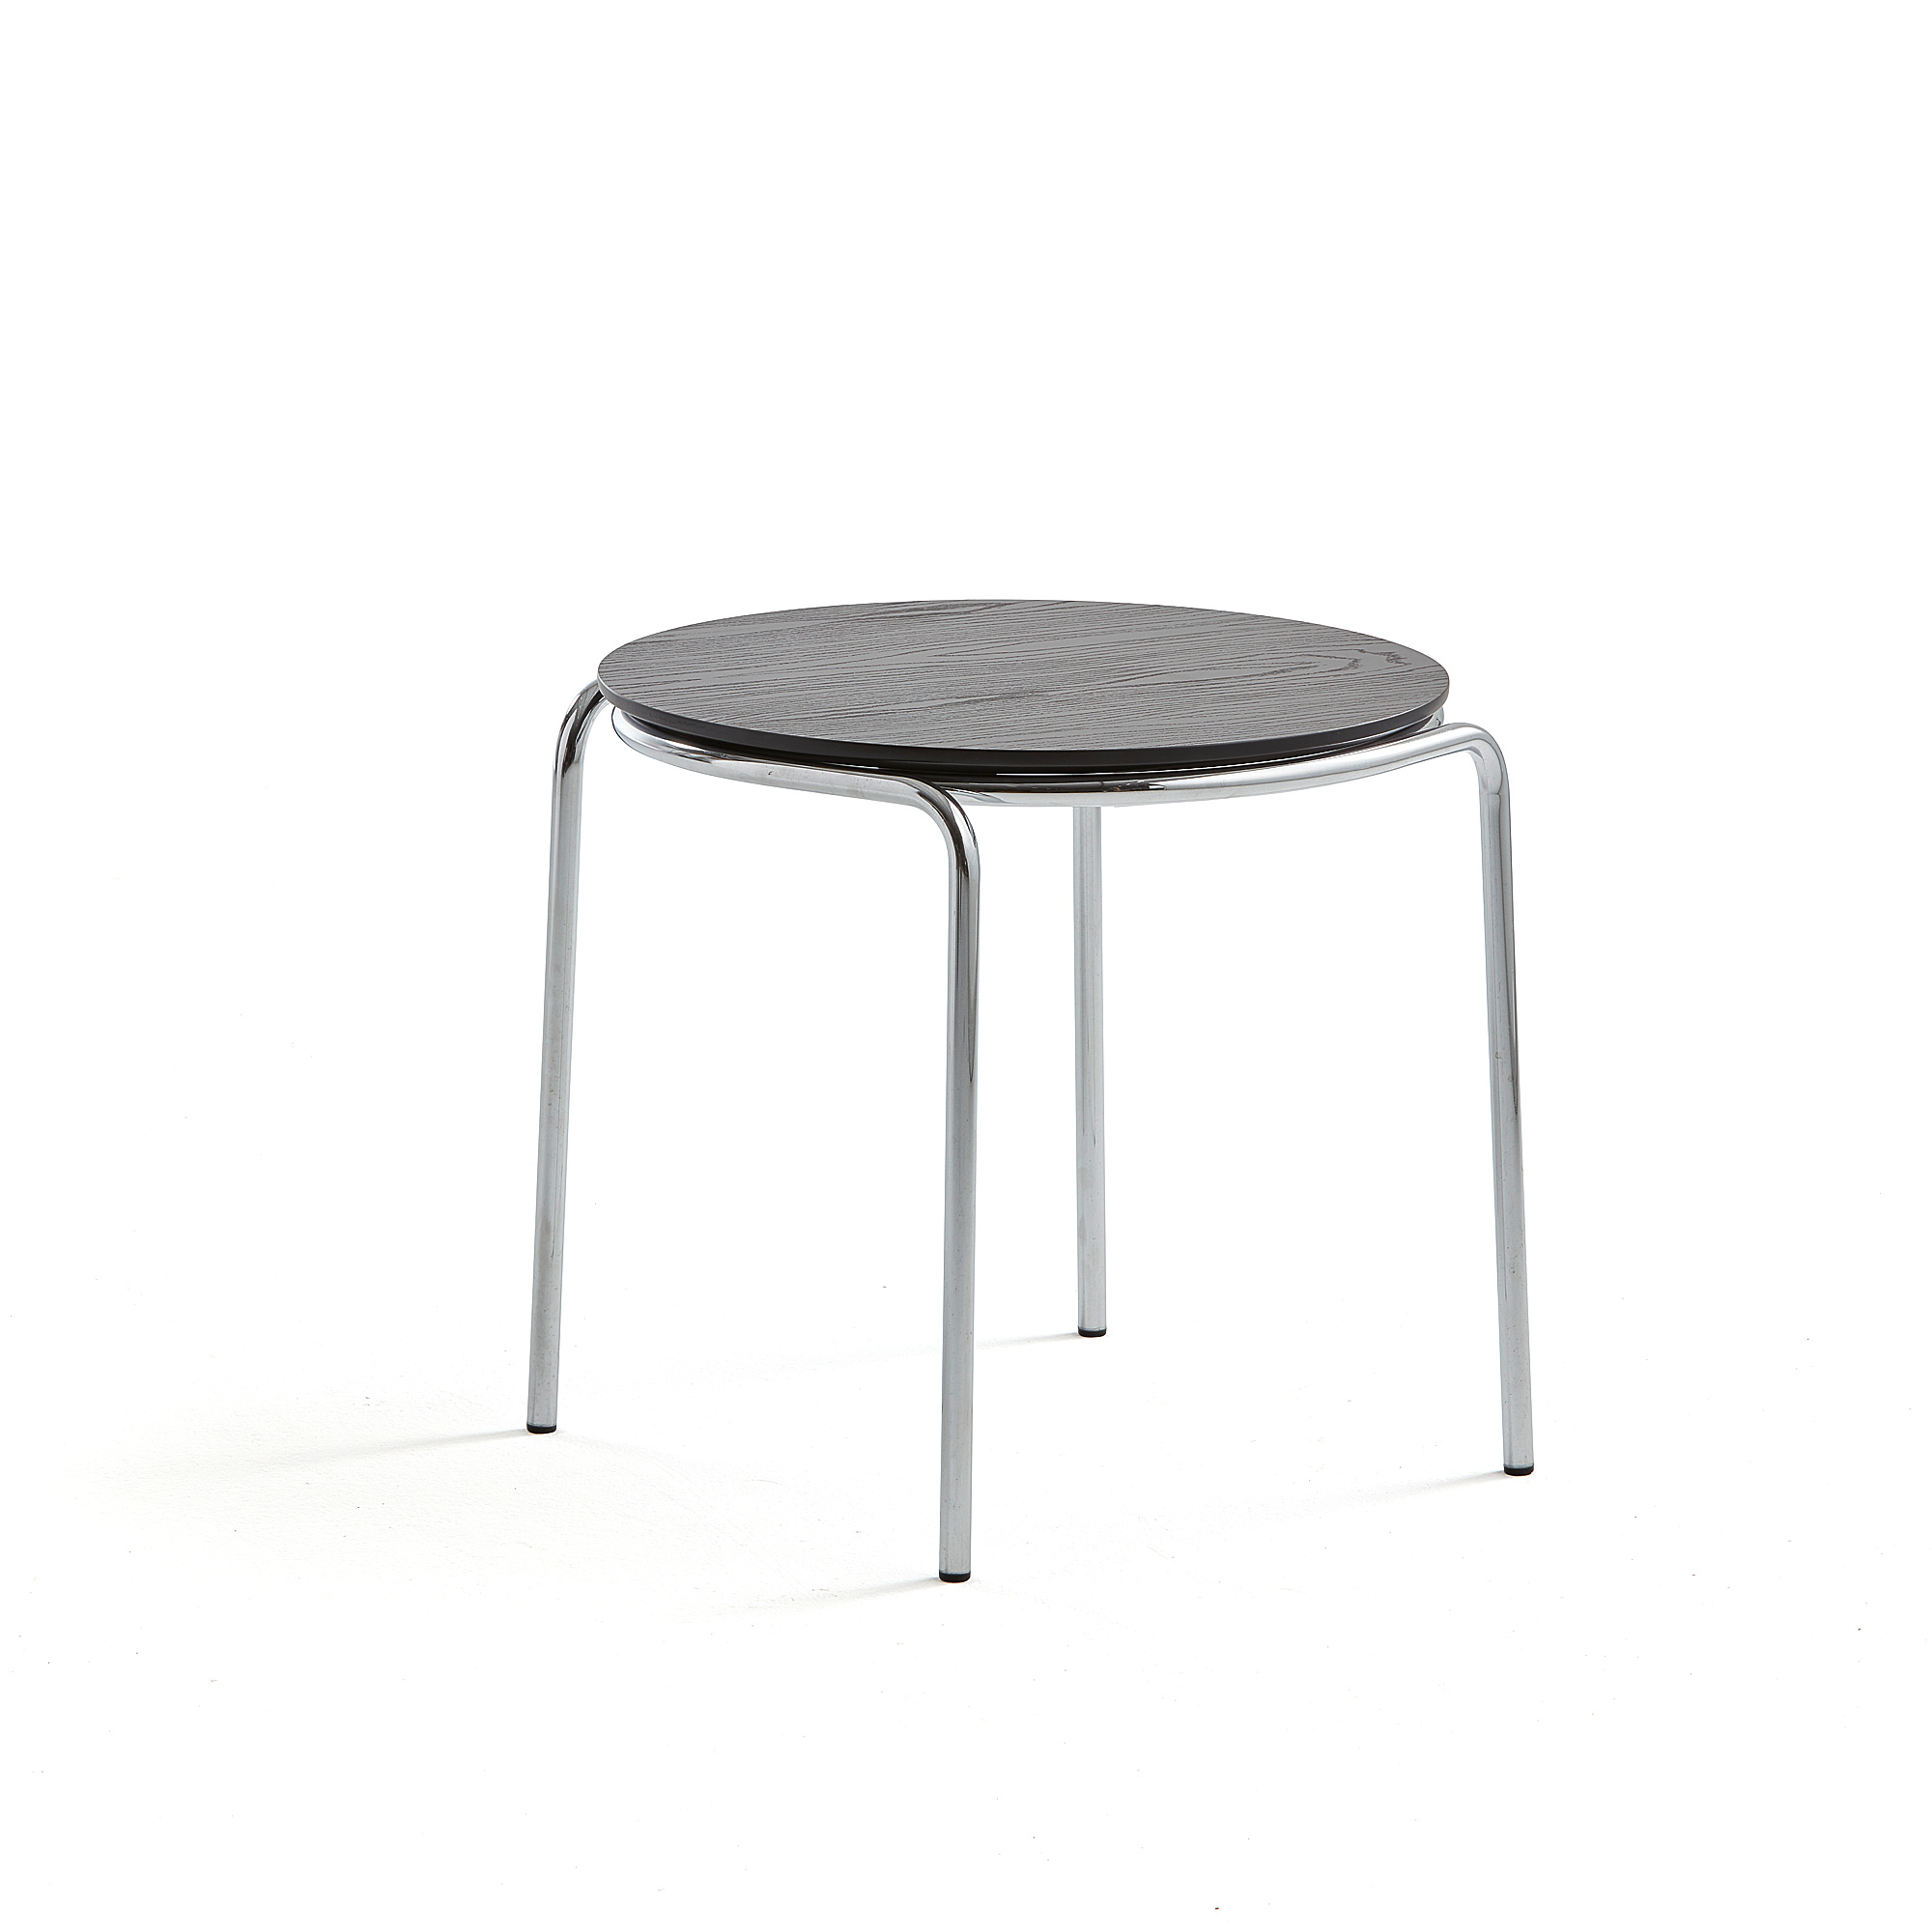 Konferenčný stolík ASHLEY, Ø570 x 470 mm, chróm, čierna